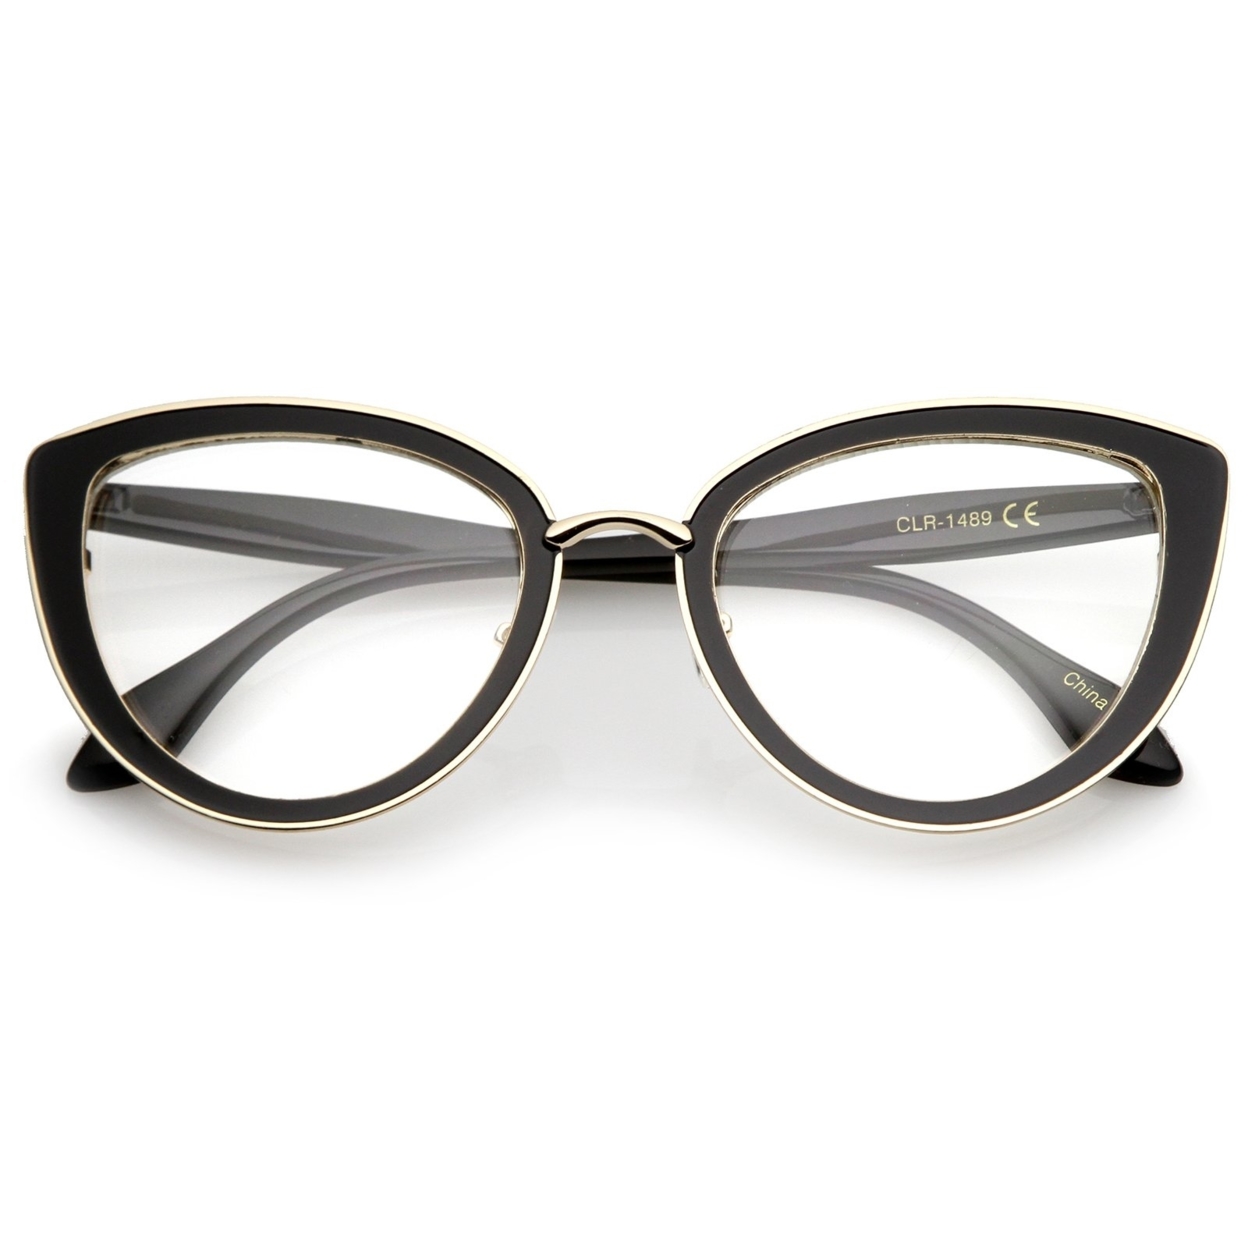 Women's High Sitting Temples Teardrop Clear Lens Cat Eye Glasses 53mm - Shiny Black-Gold-Black / Clear